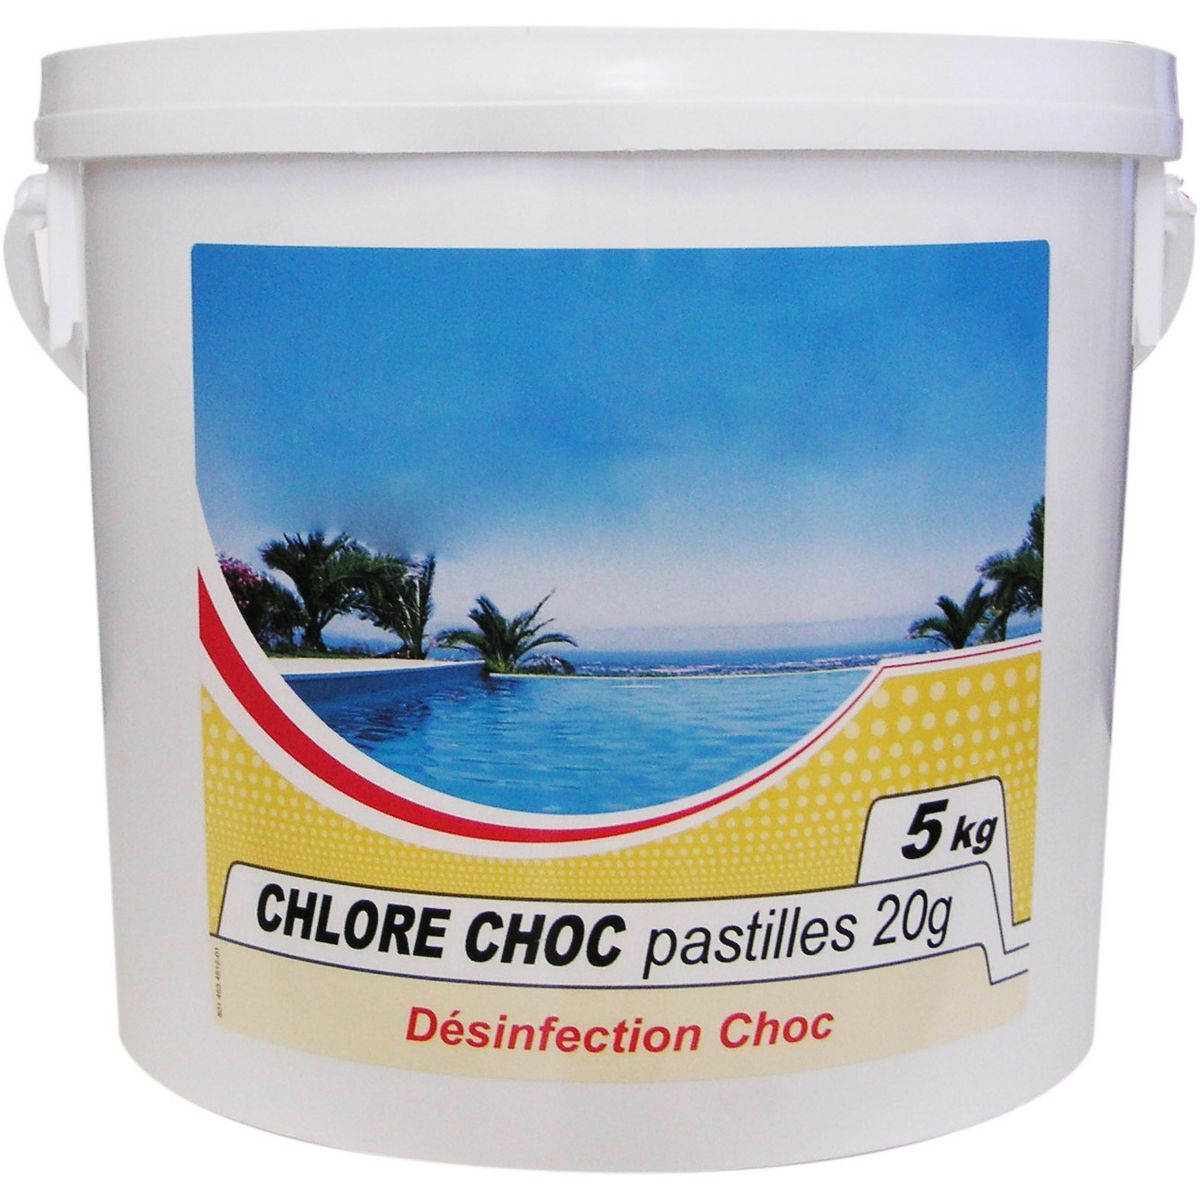 Nmp Chlore choc pastille 5kg - chlore choc